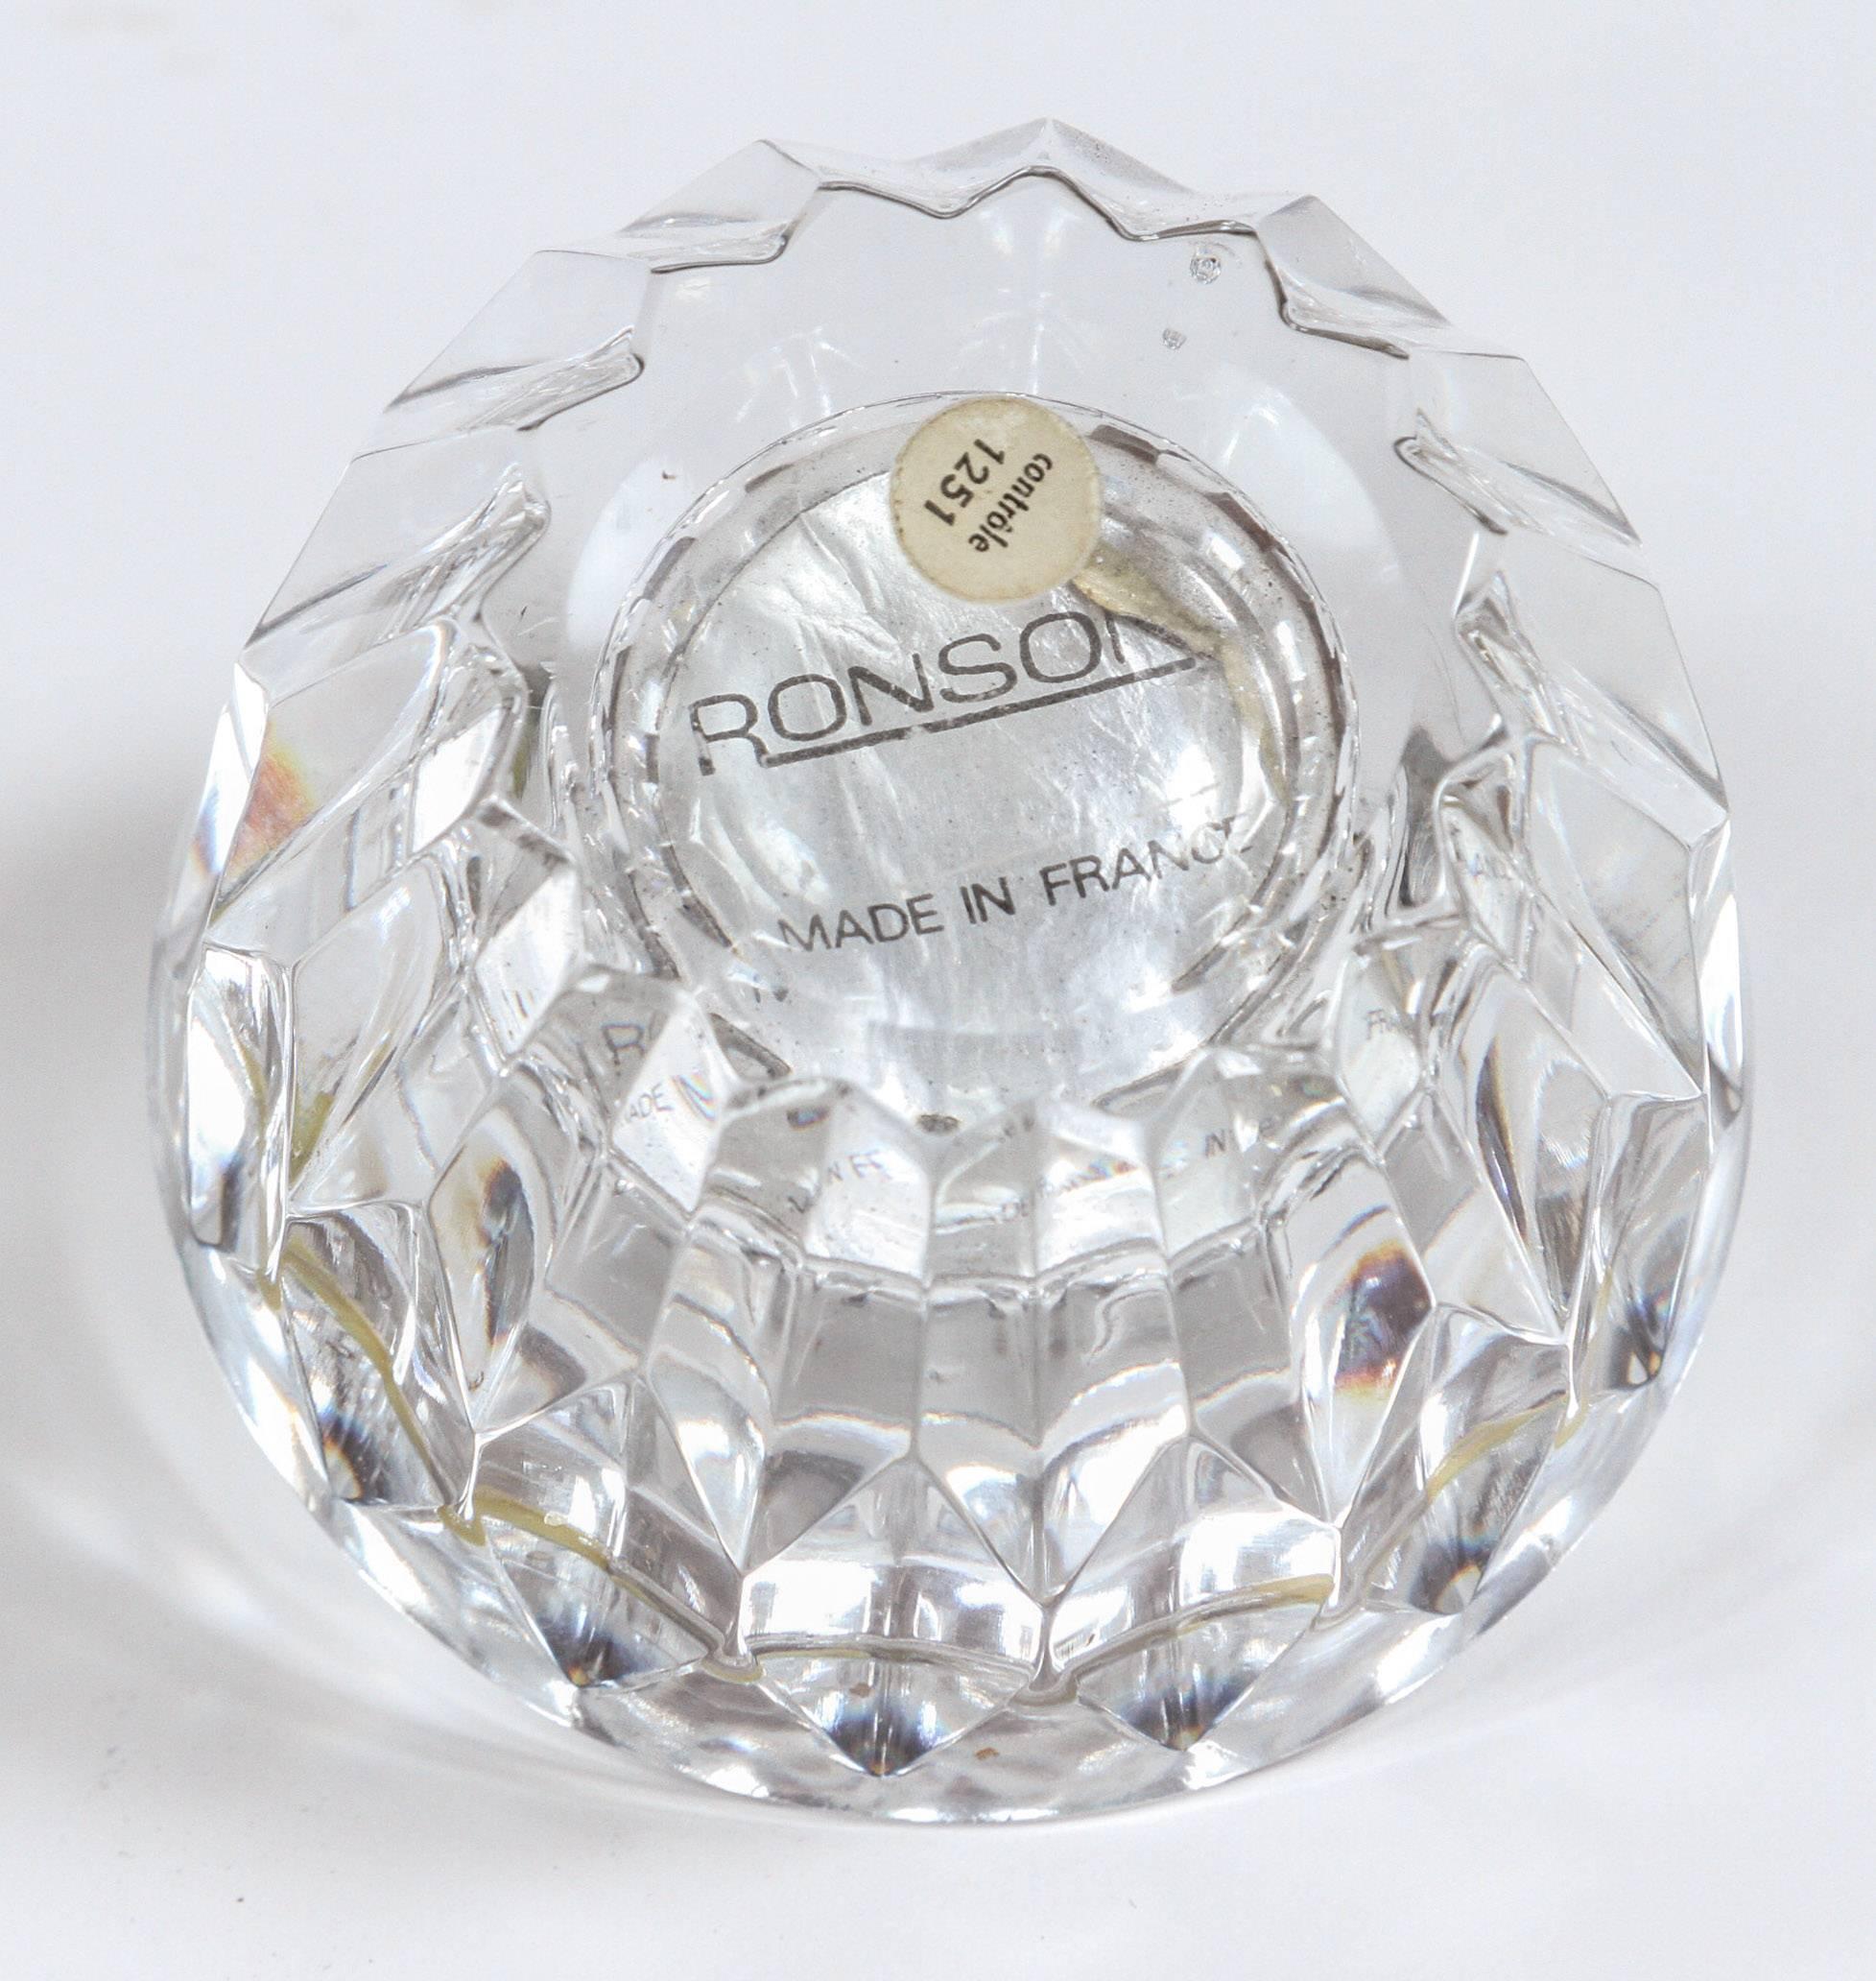 Modern Ronson Crystal Table Lighter, Made in France